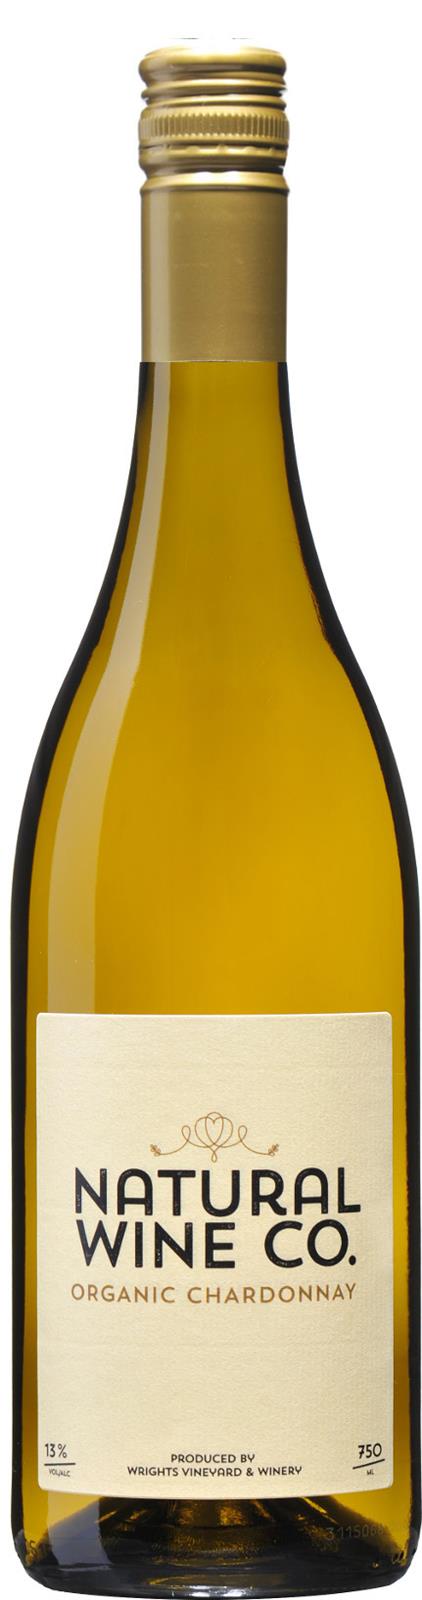 Natural Wine Co Gisborne Organic Chardonnay 2020